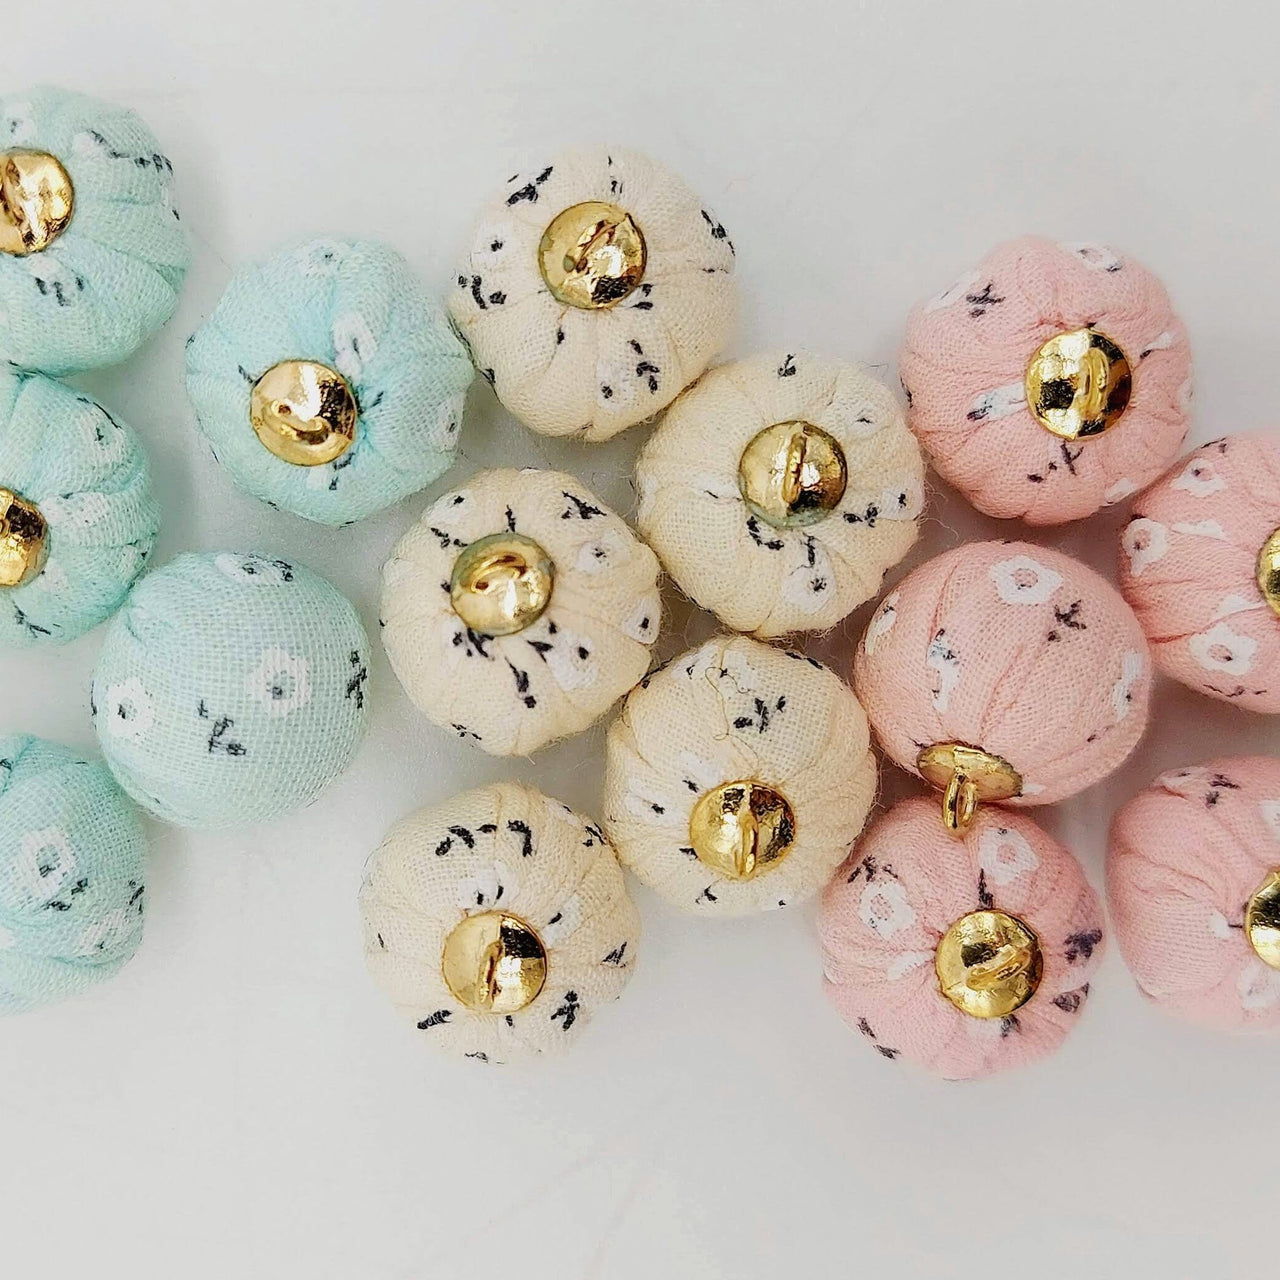 Aqua Blue Floral Printed Cotton Fabric Ball Tassel, Button with Ring Cap, Decorative Tassels